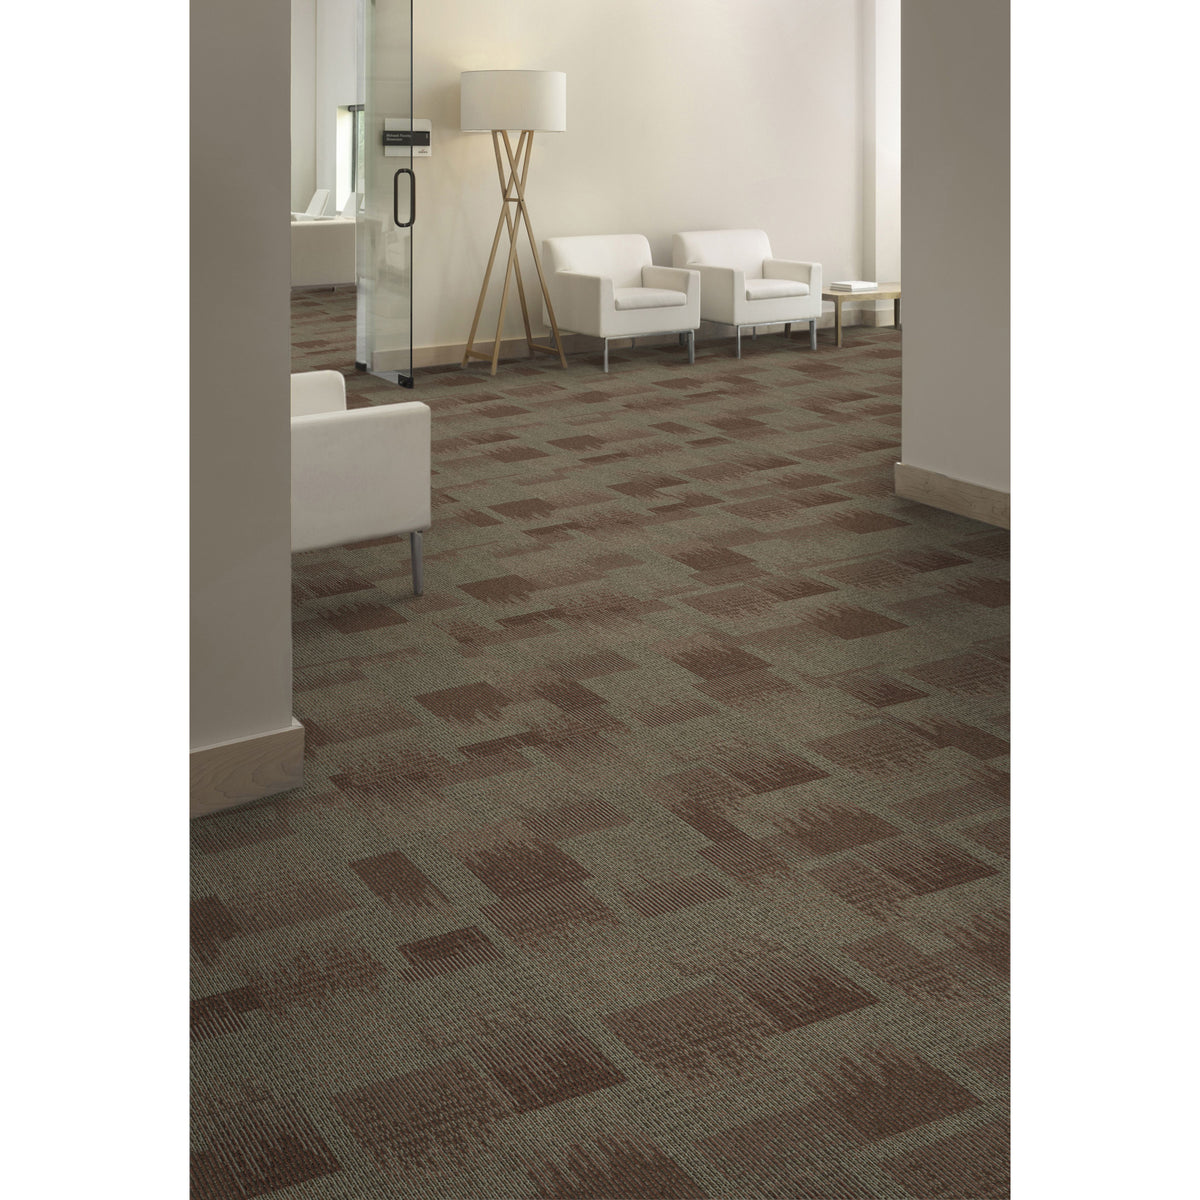 Aladdin Commercial - Commerce - Onward Bound - Carpet Tile - Get Inspired - Room Scene